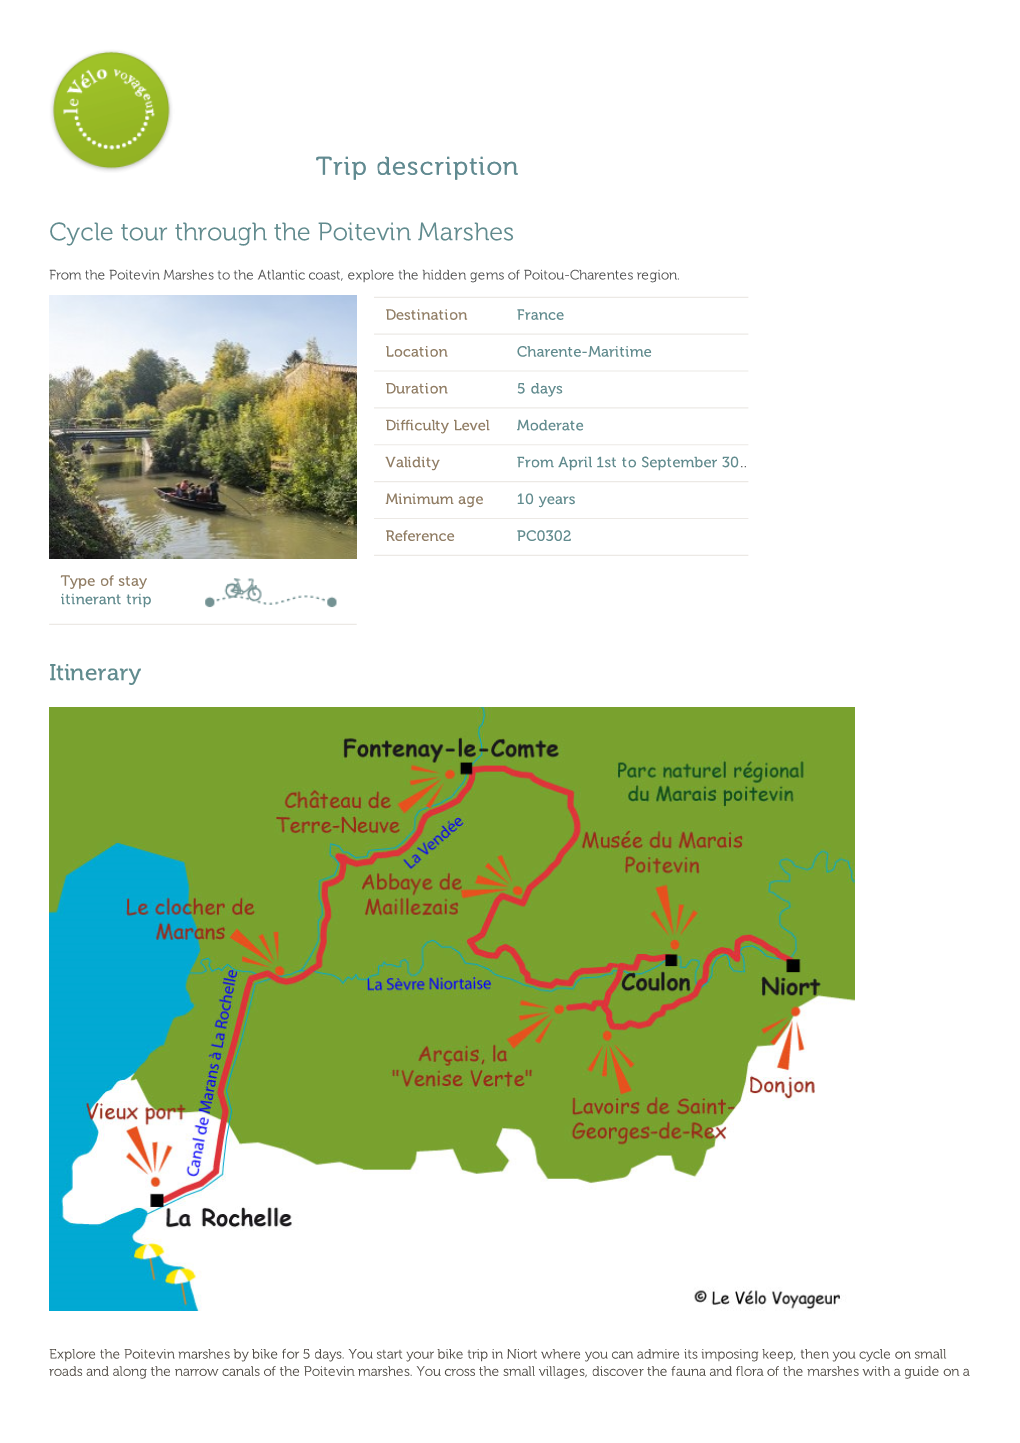 Trip Description Cycle Tour Through the Poitevin Marshes